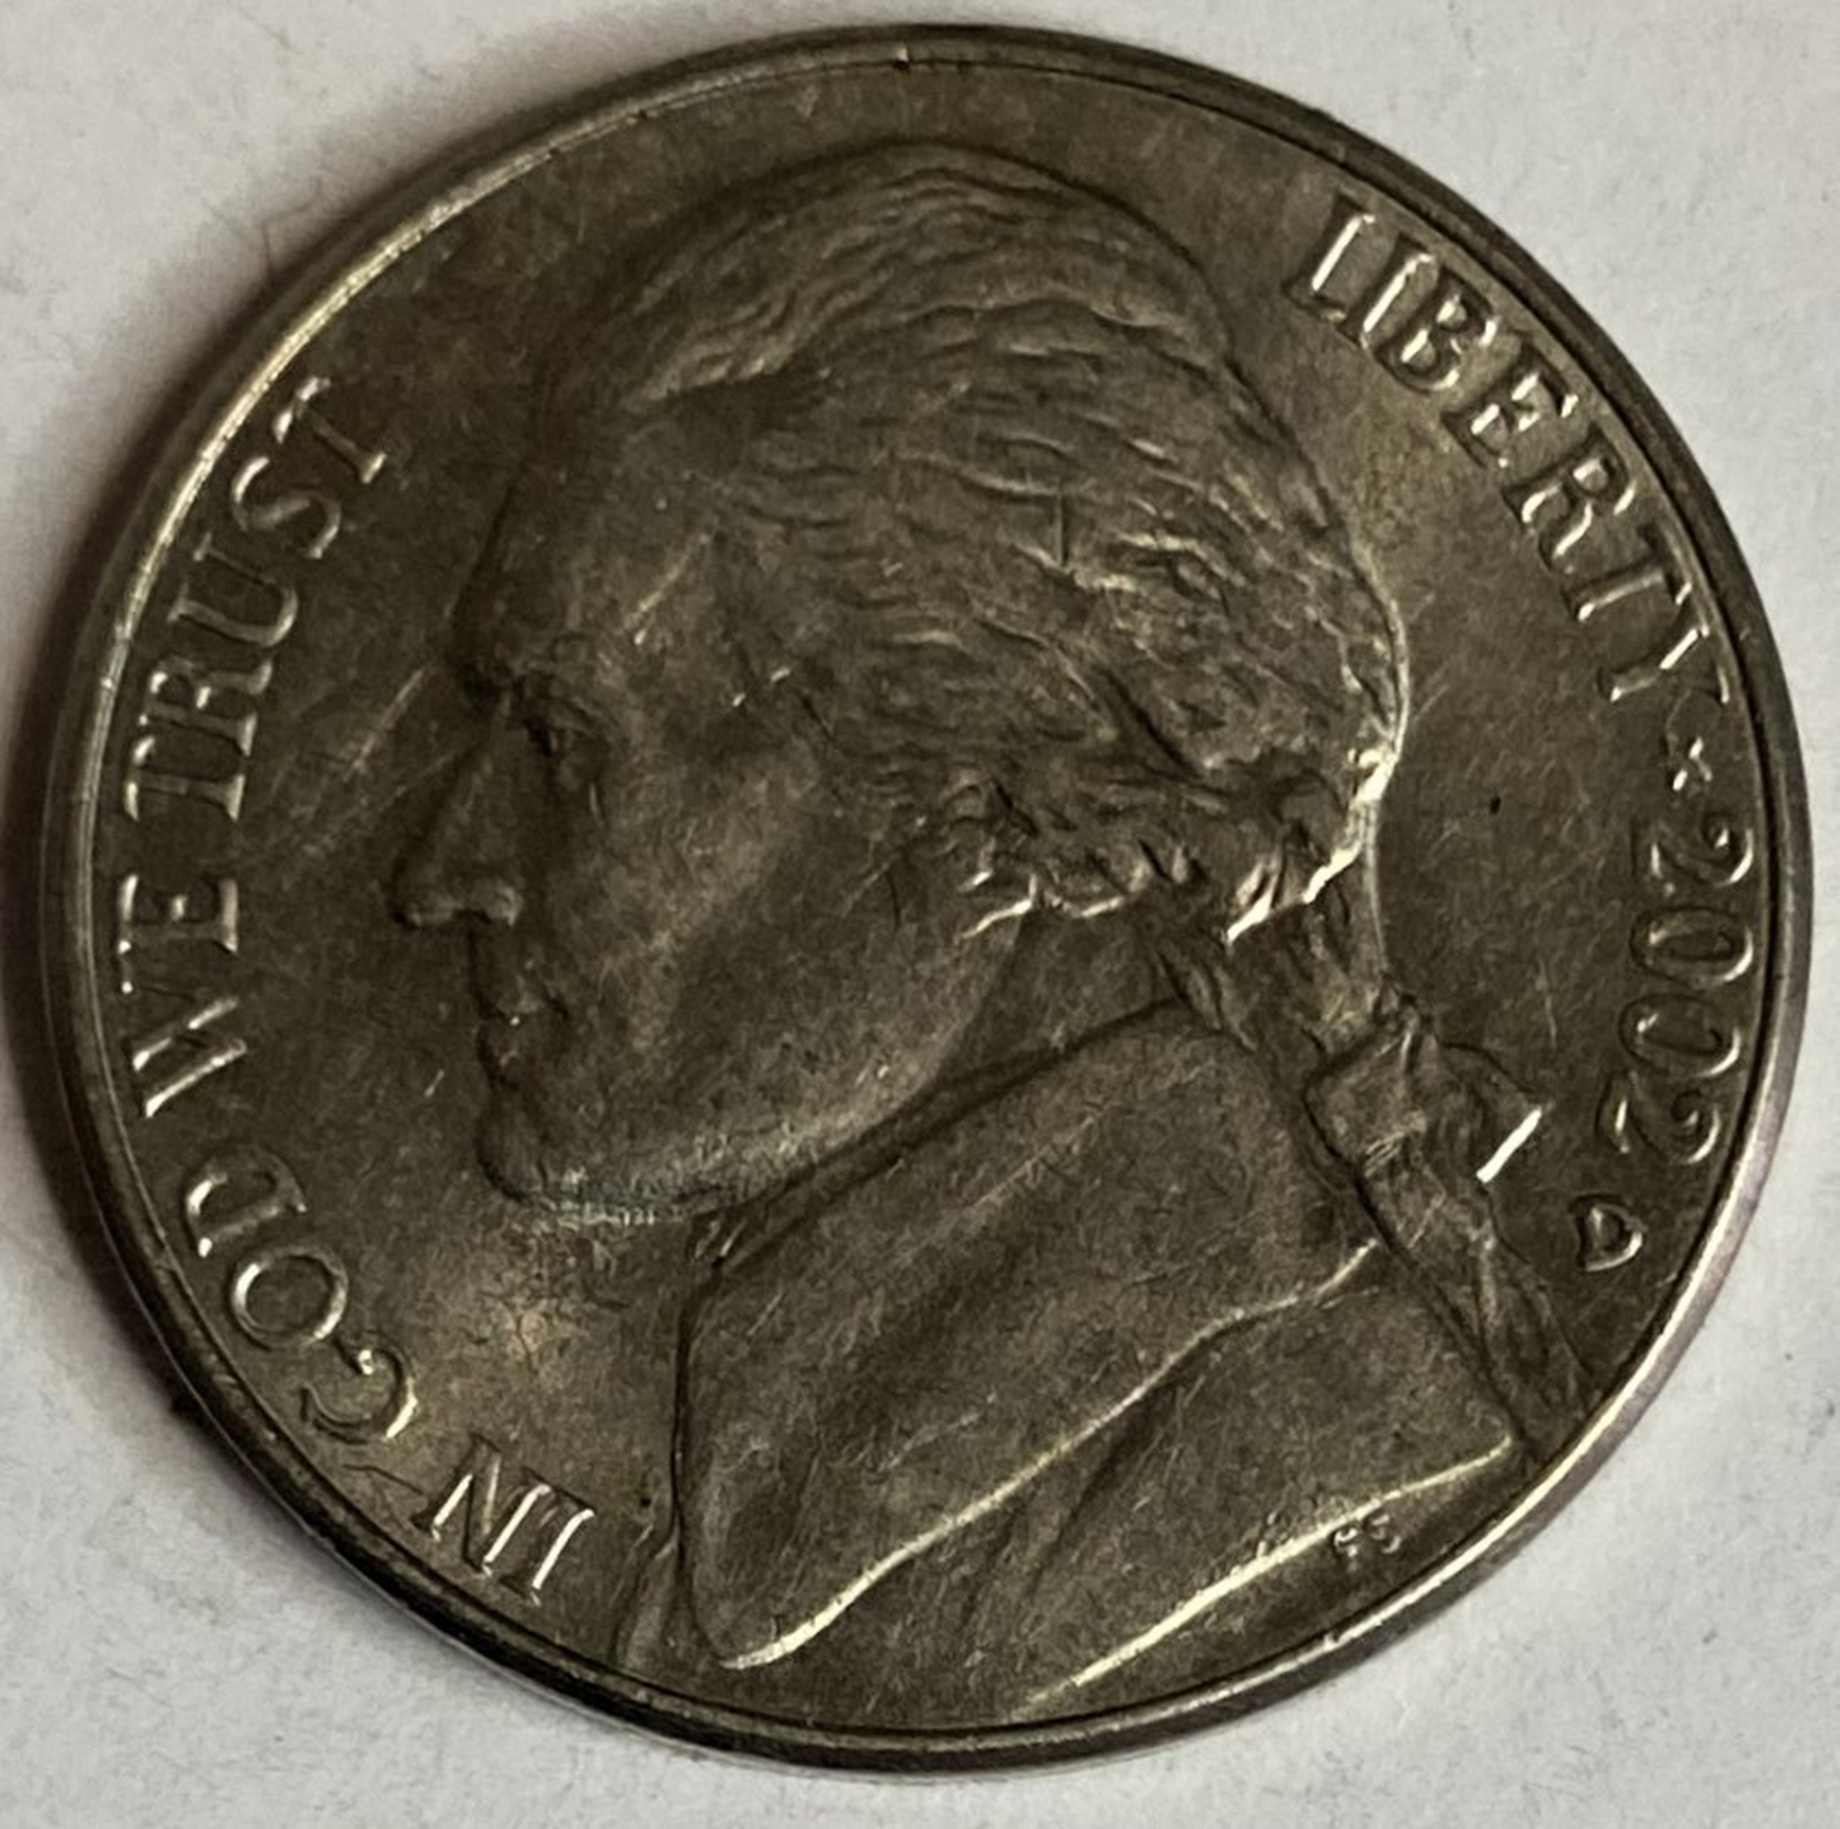 Иностранная монета США 5 центов 2002 год Америка